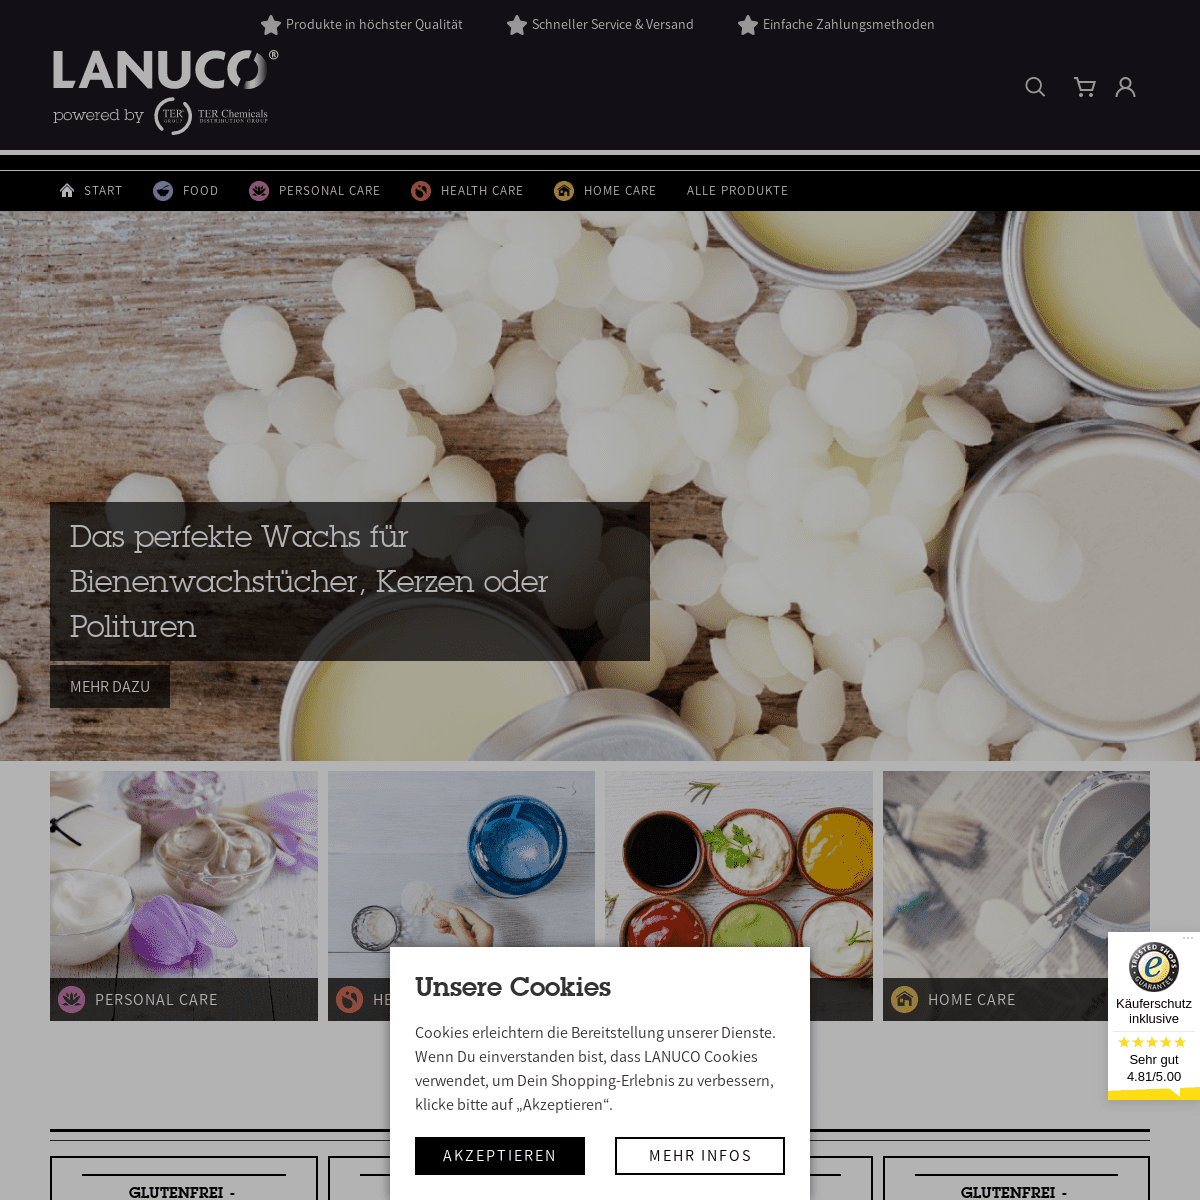 A complete backup of lanuco.com